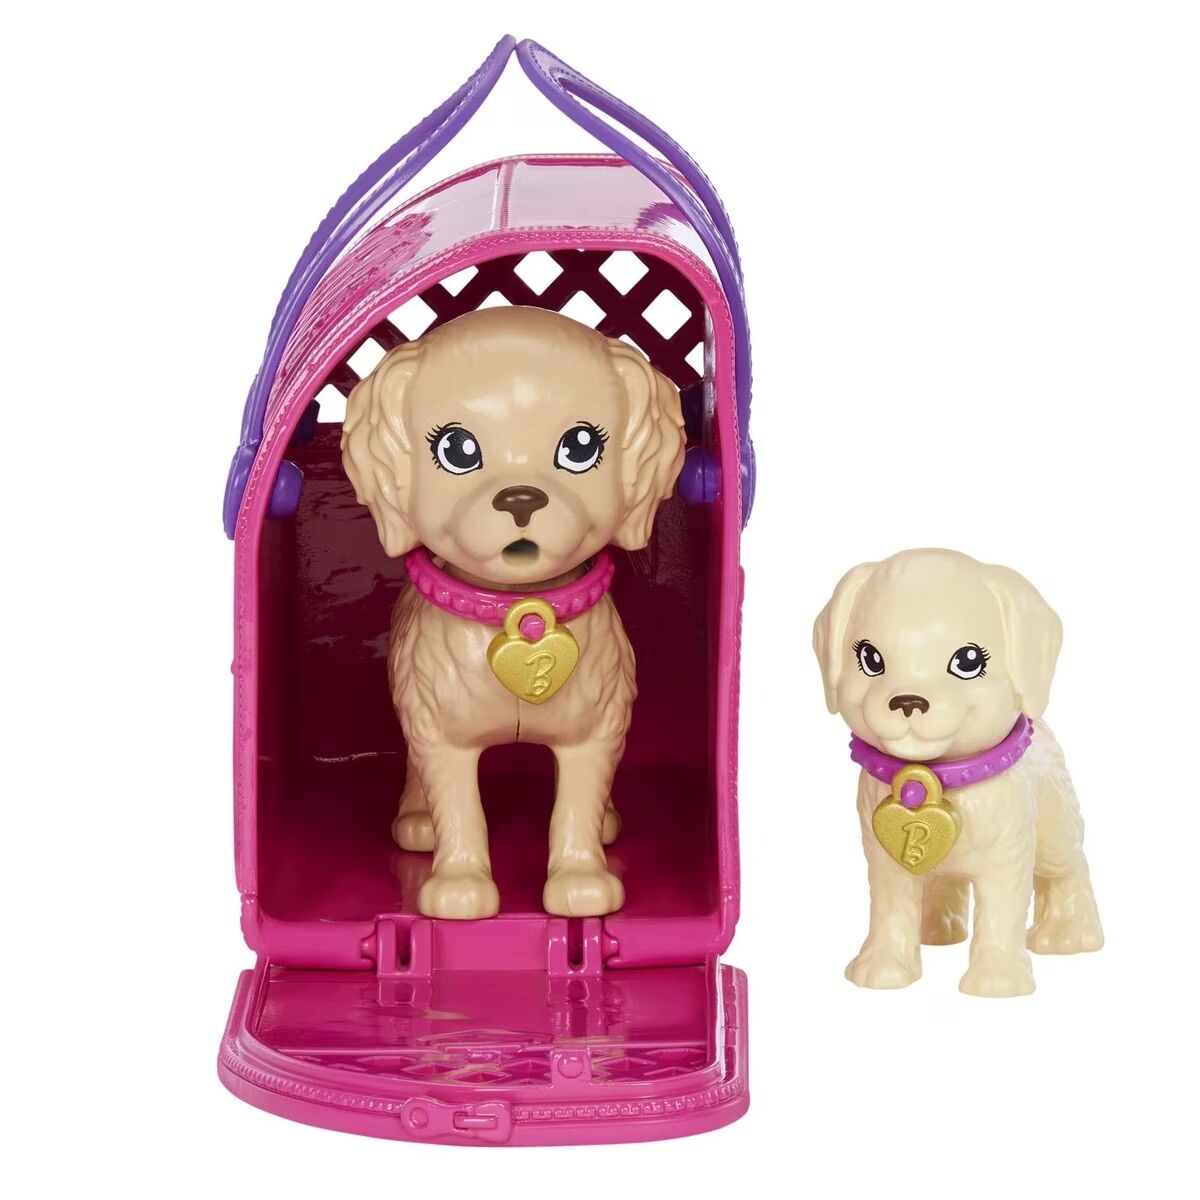 Boneca Articulada - Barbie Pets - Loja de Pet Shop - 25 peças - Mattel